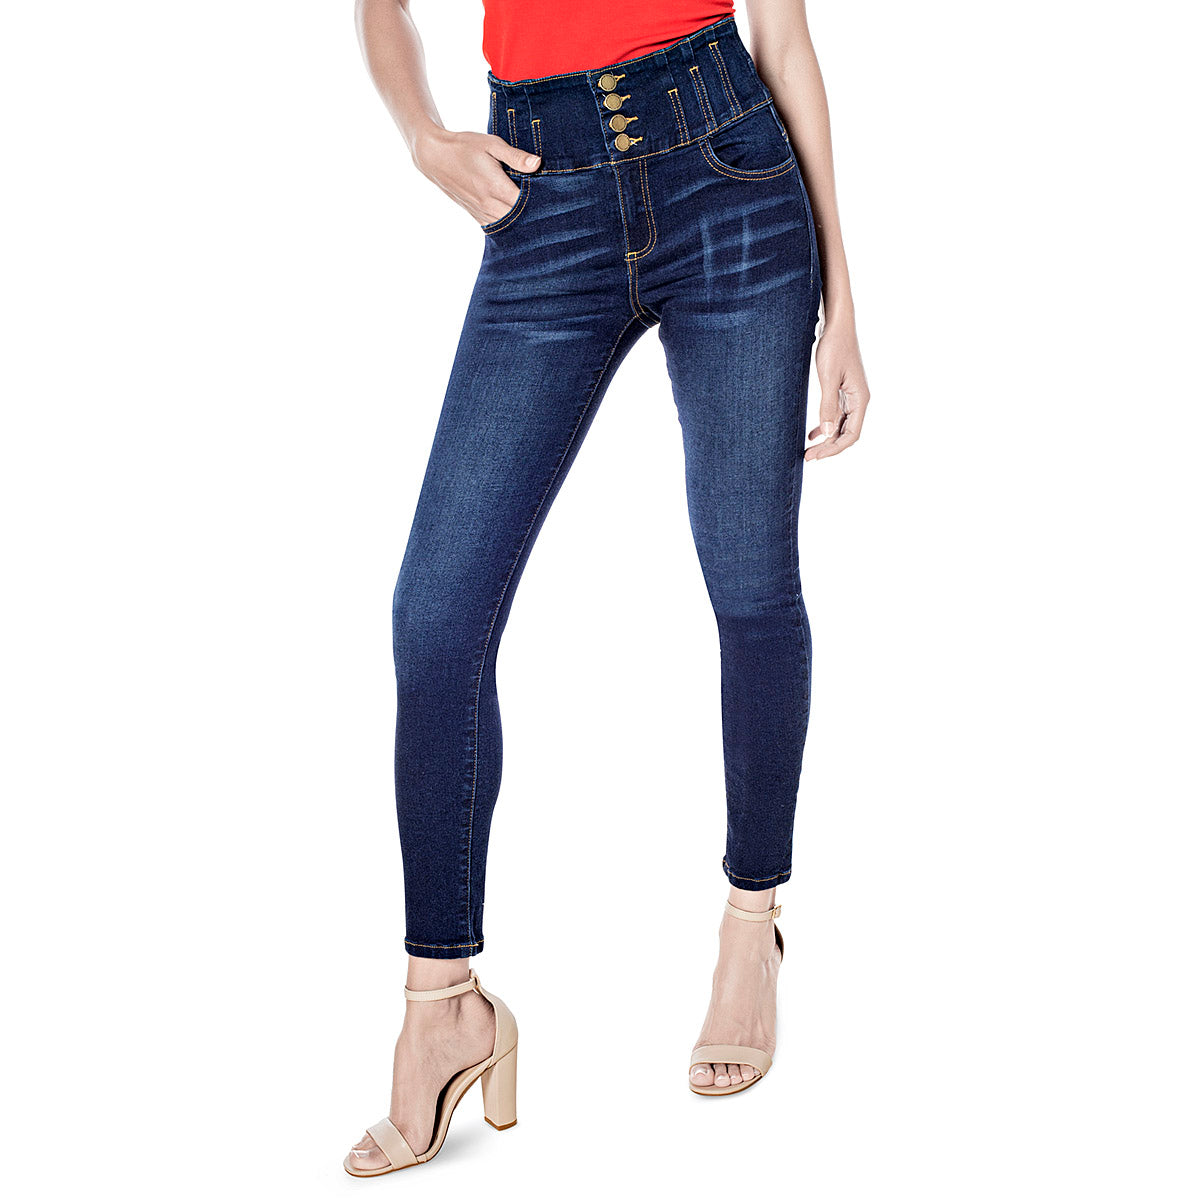 Pakar.com - Mayo: Regalos para mamá | Jeans para mujer cod-121736